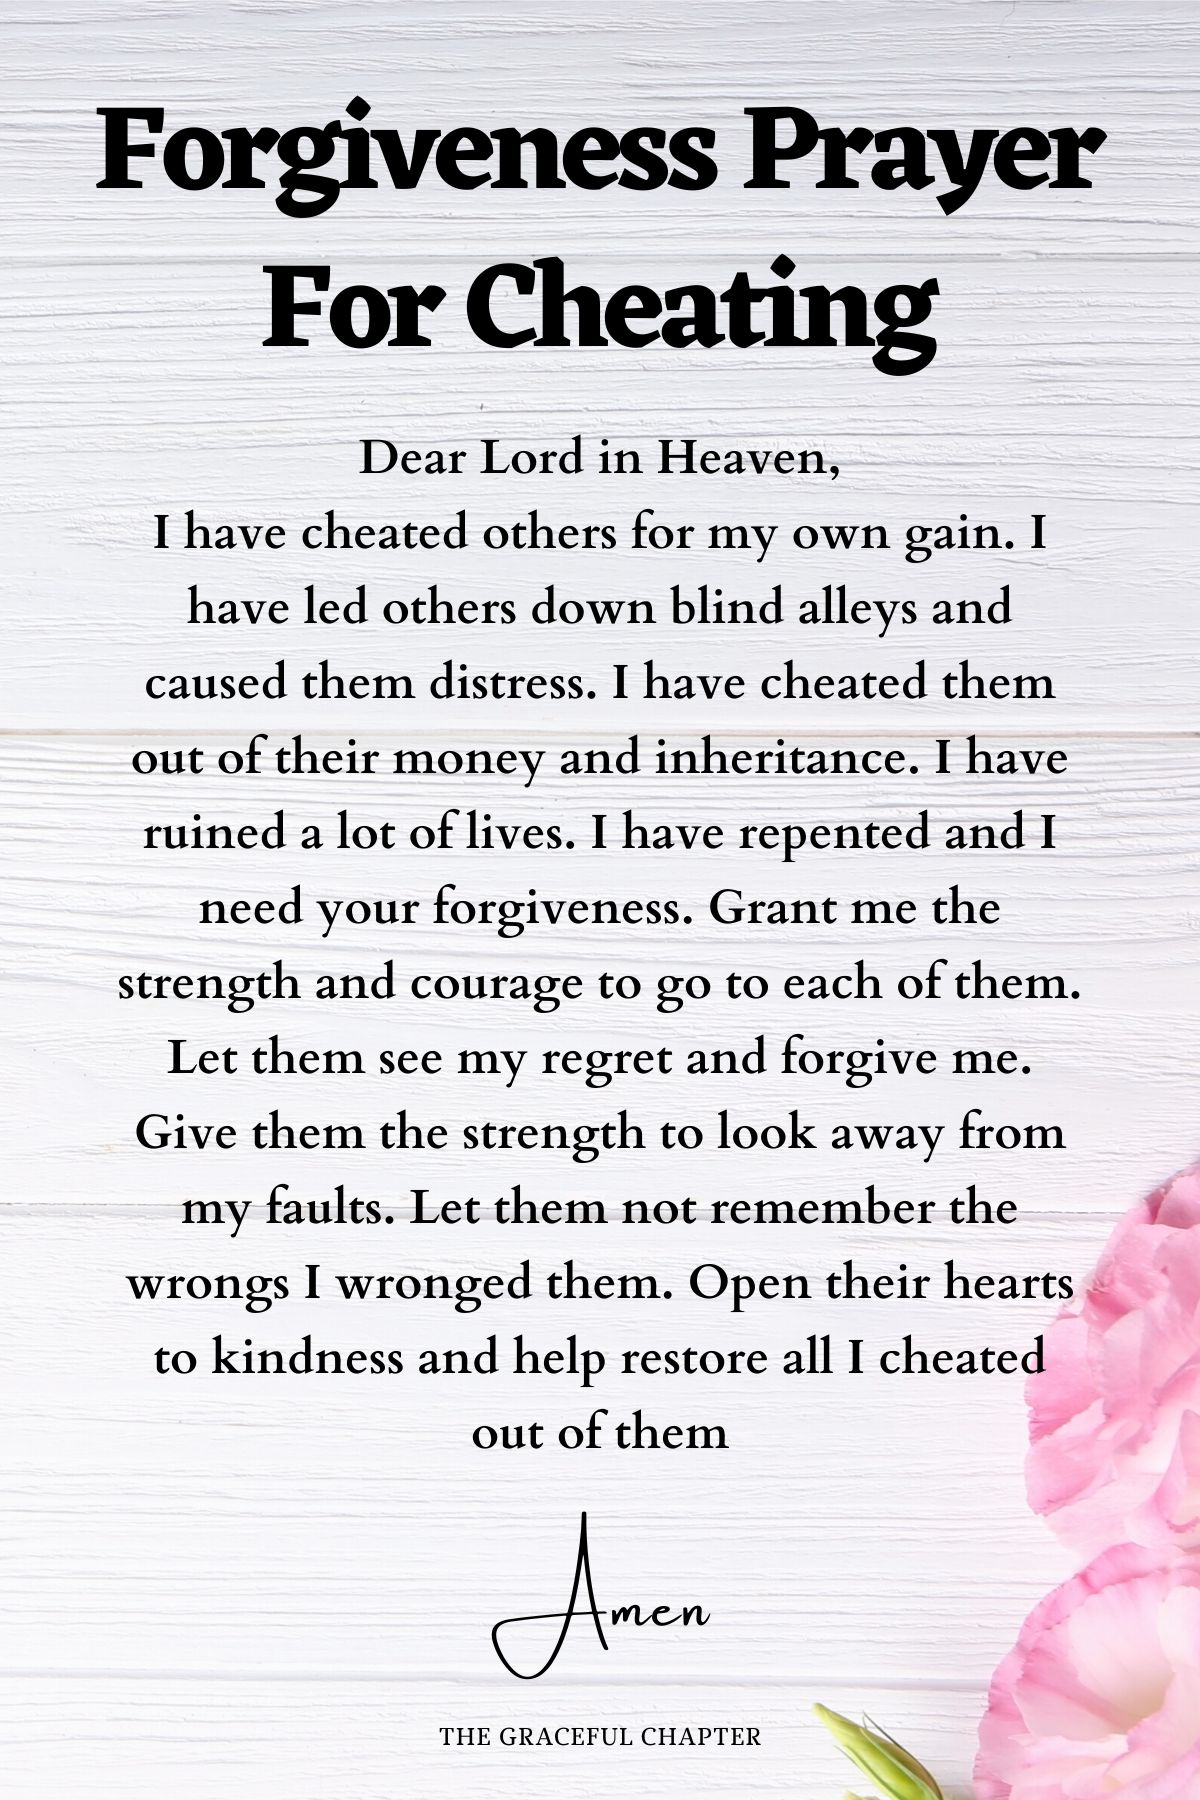 Forgiveness prayer for cheating